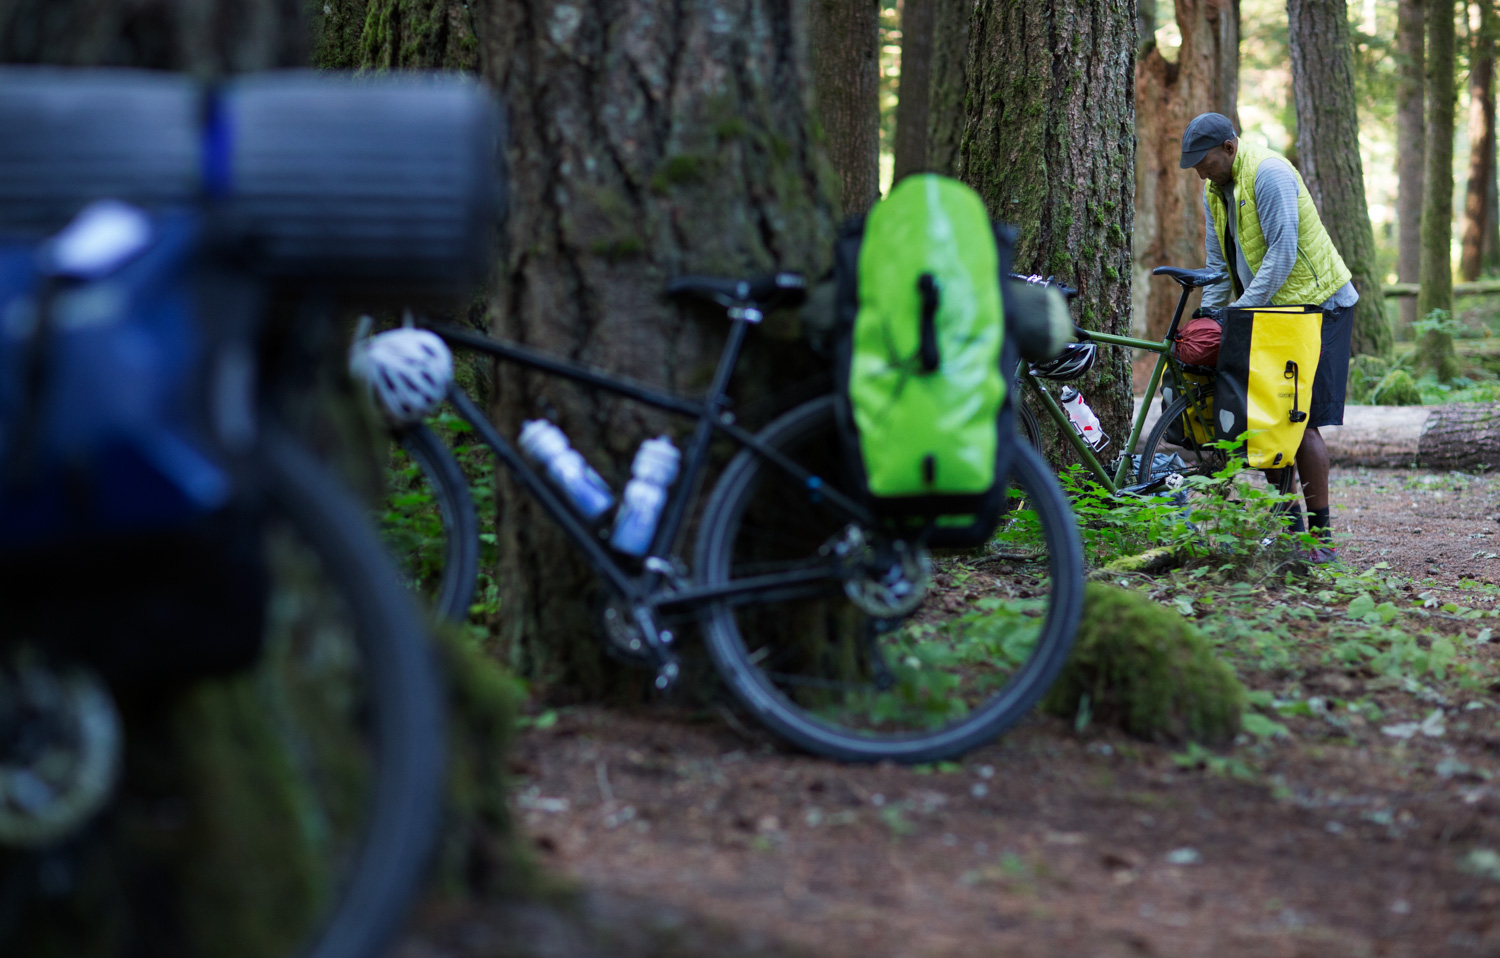  REI Novara bikes loaded with camping gear. Mount St. Helens, WA 